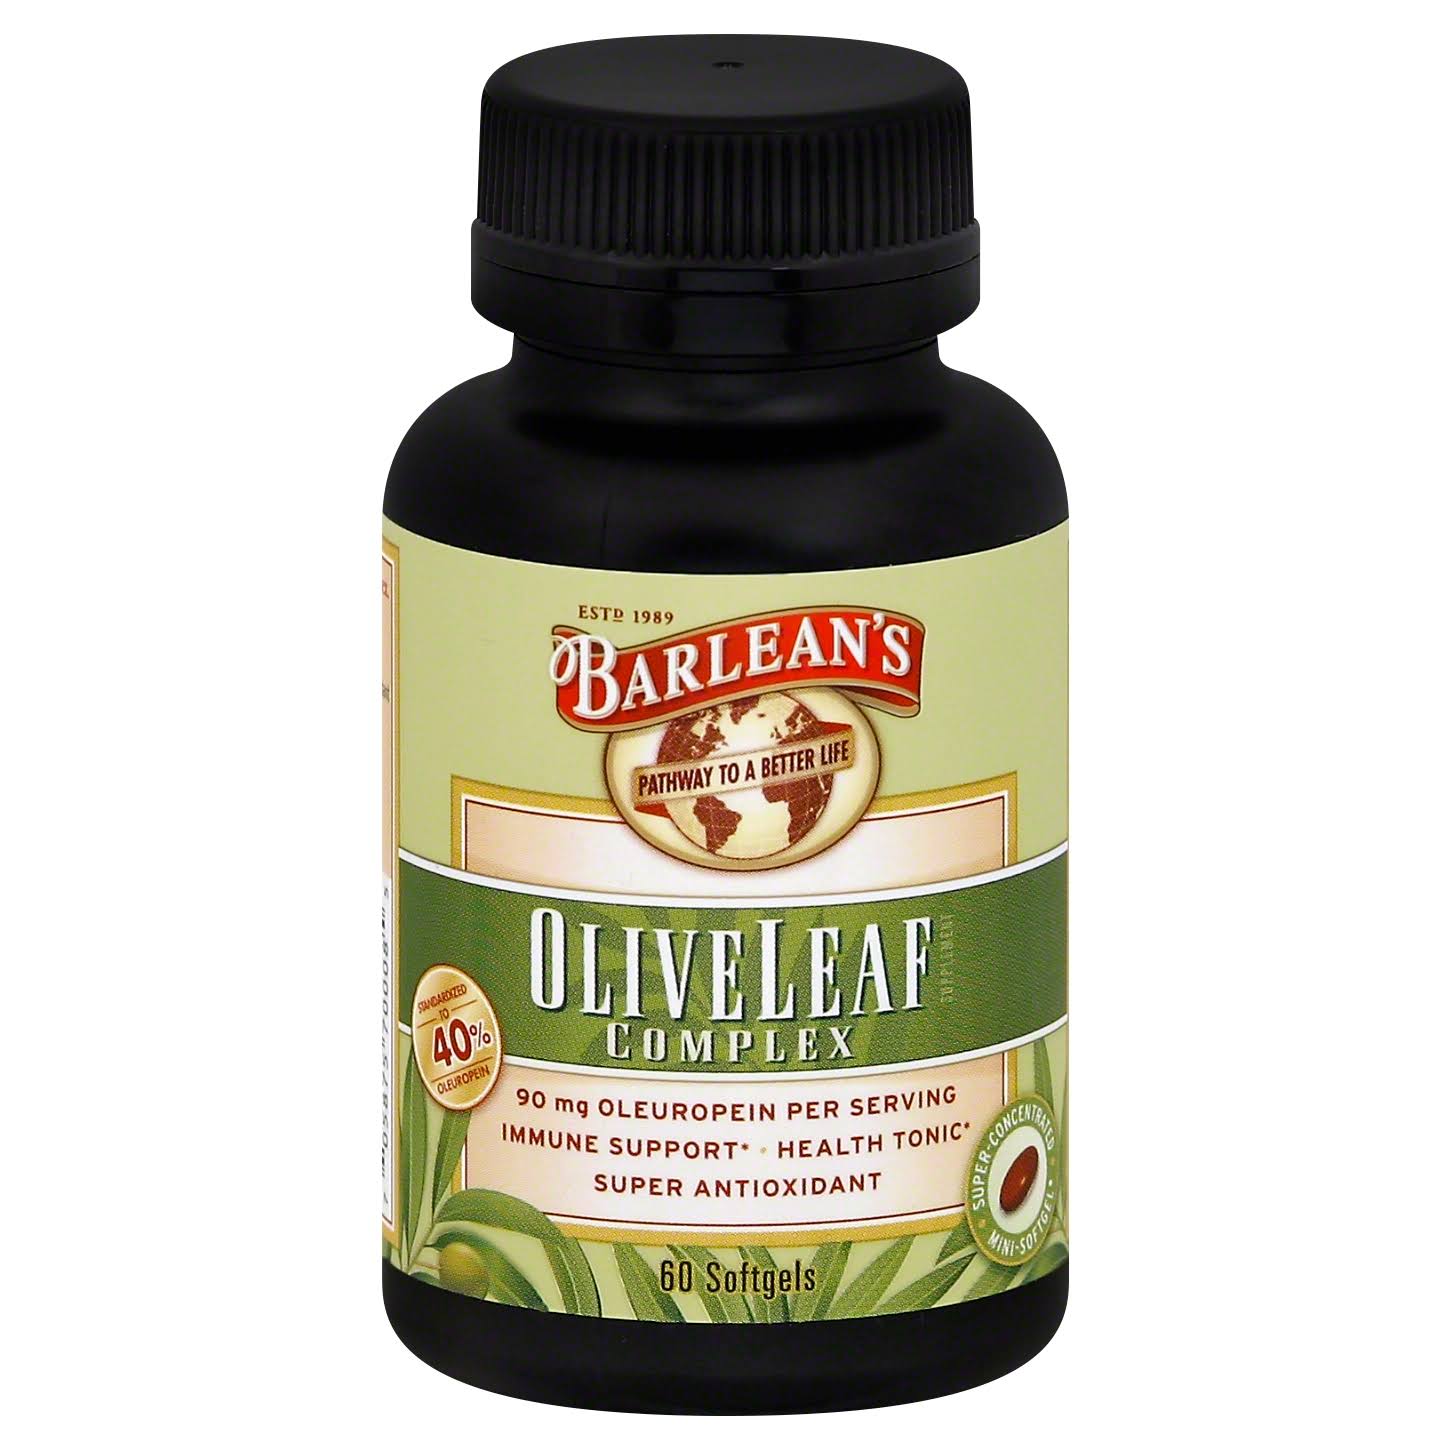 Barlean's Olive Leaf 90mg Complex - 60 Softgels